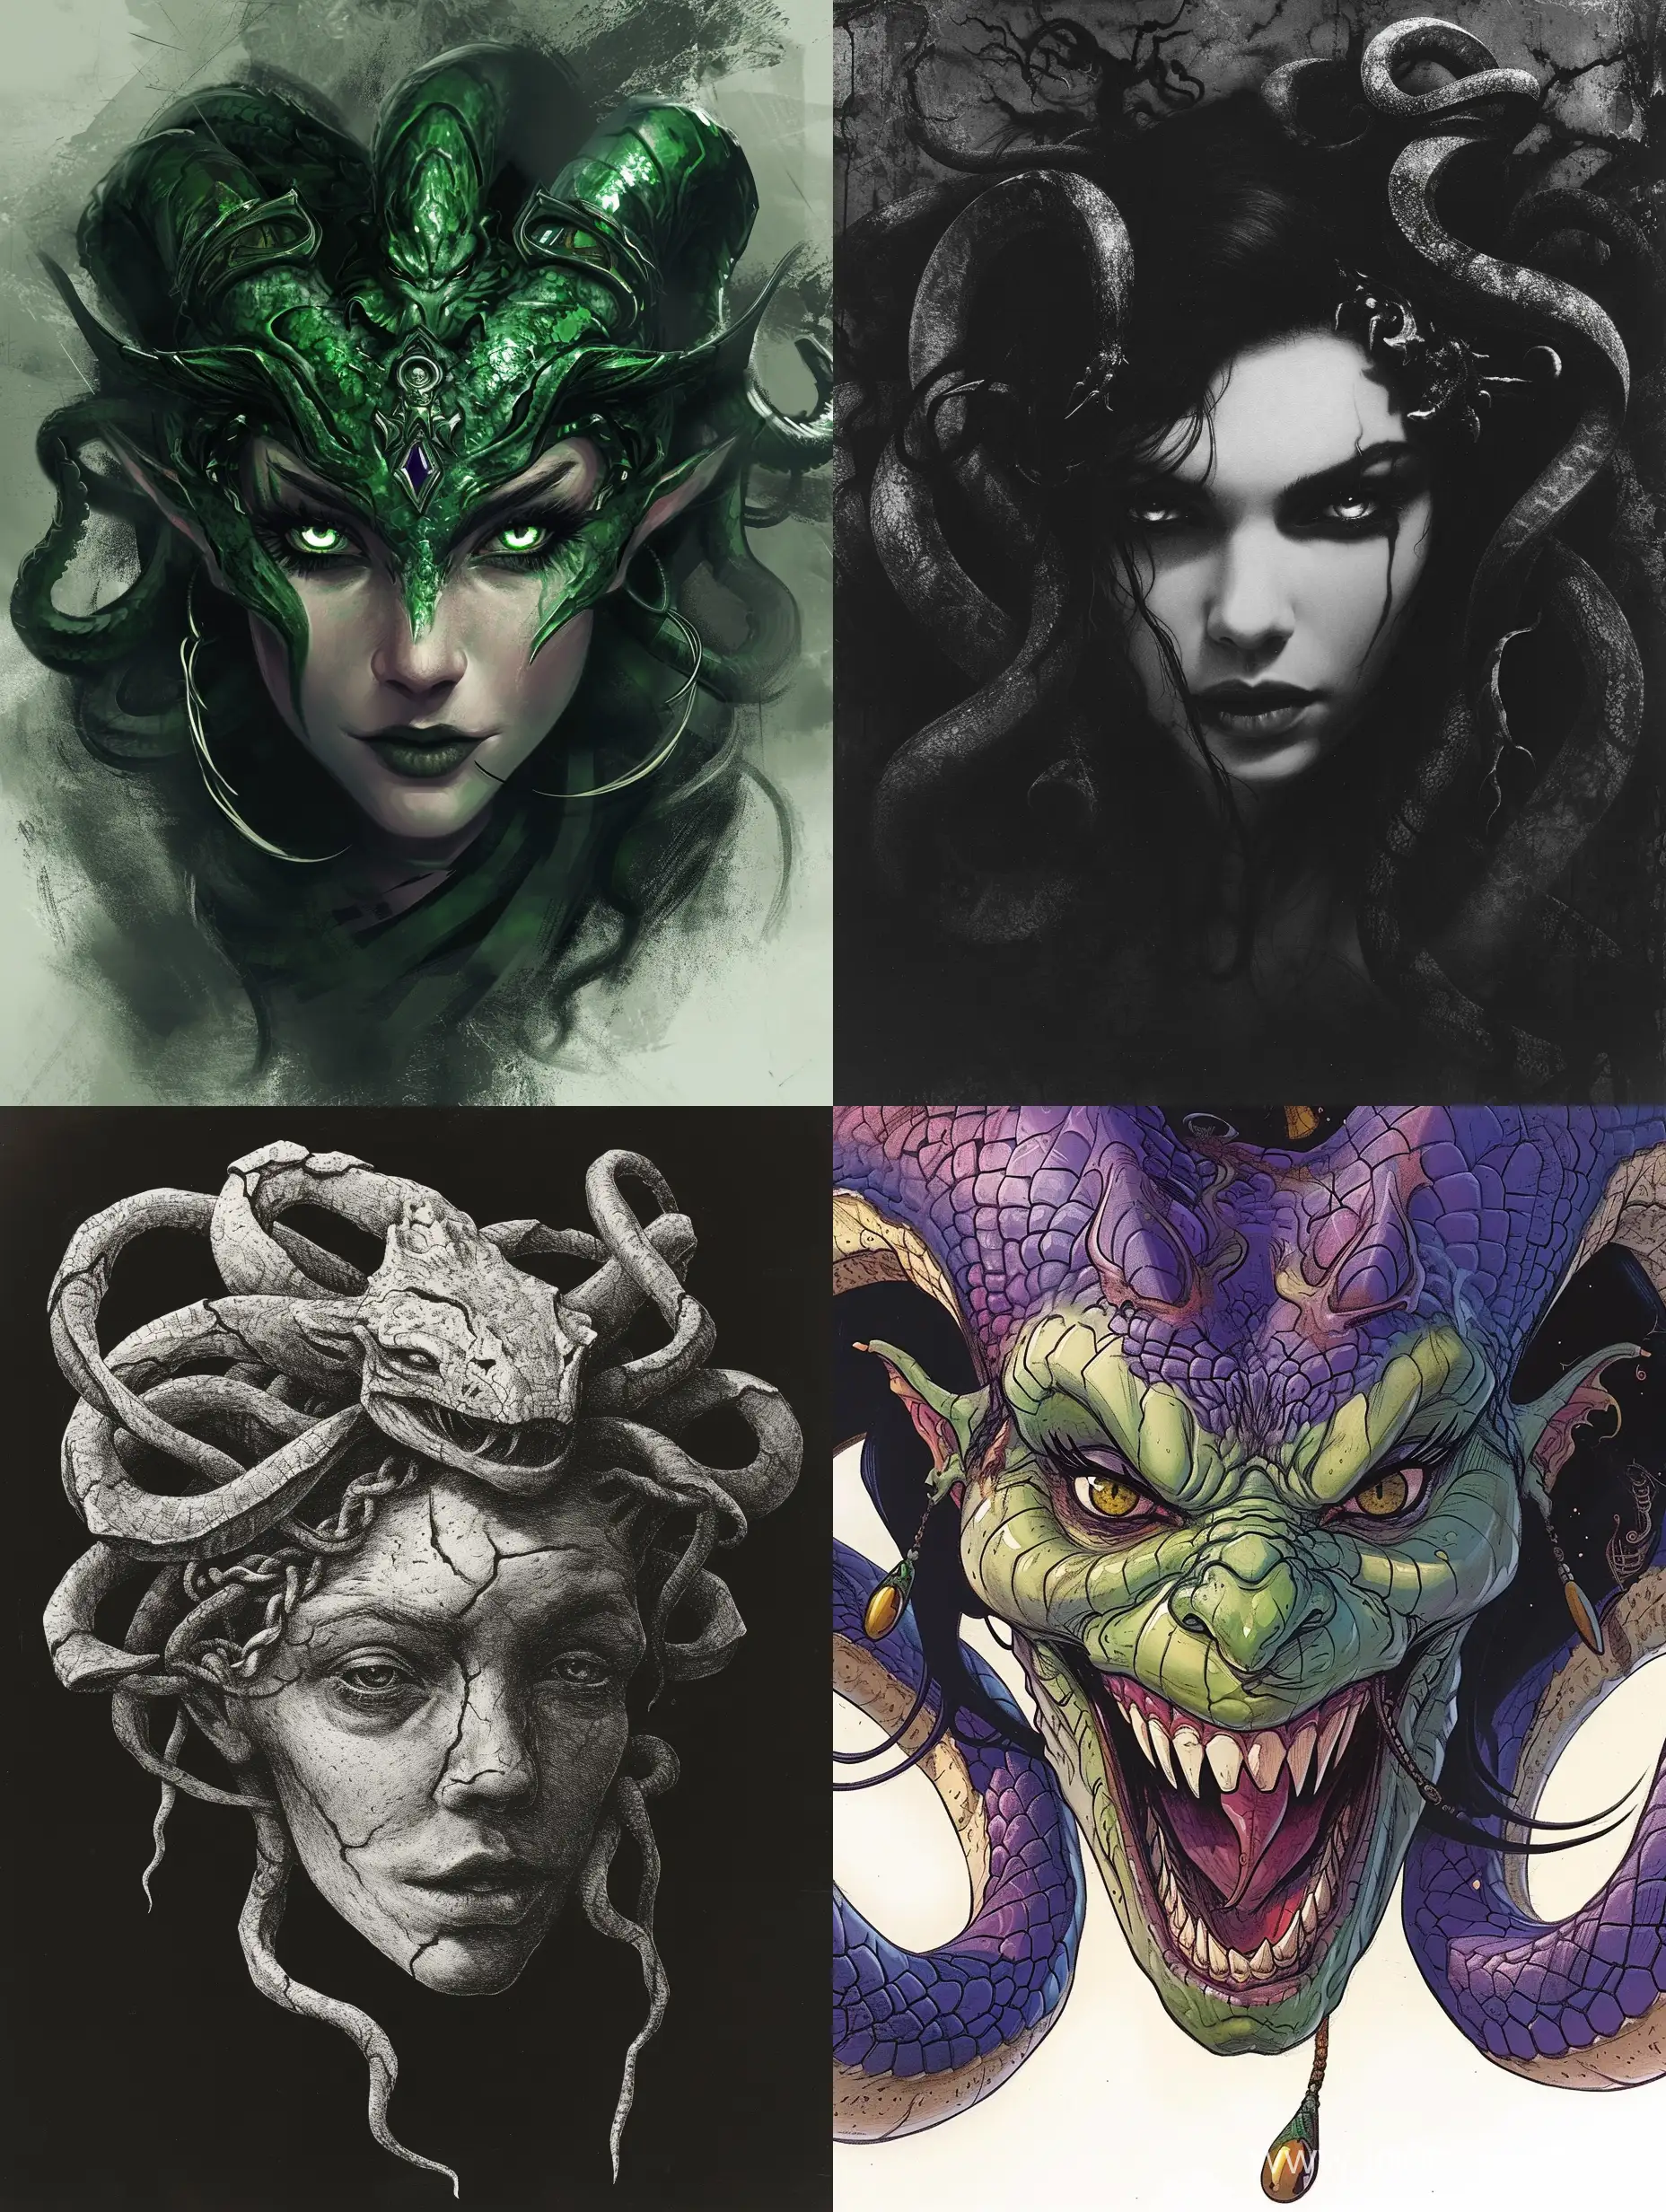 Enchanting-Gorgon-Medusa-Portrait-with-Intricate-Details